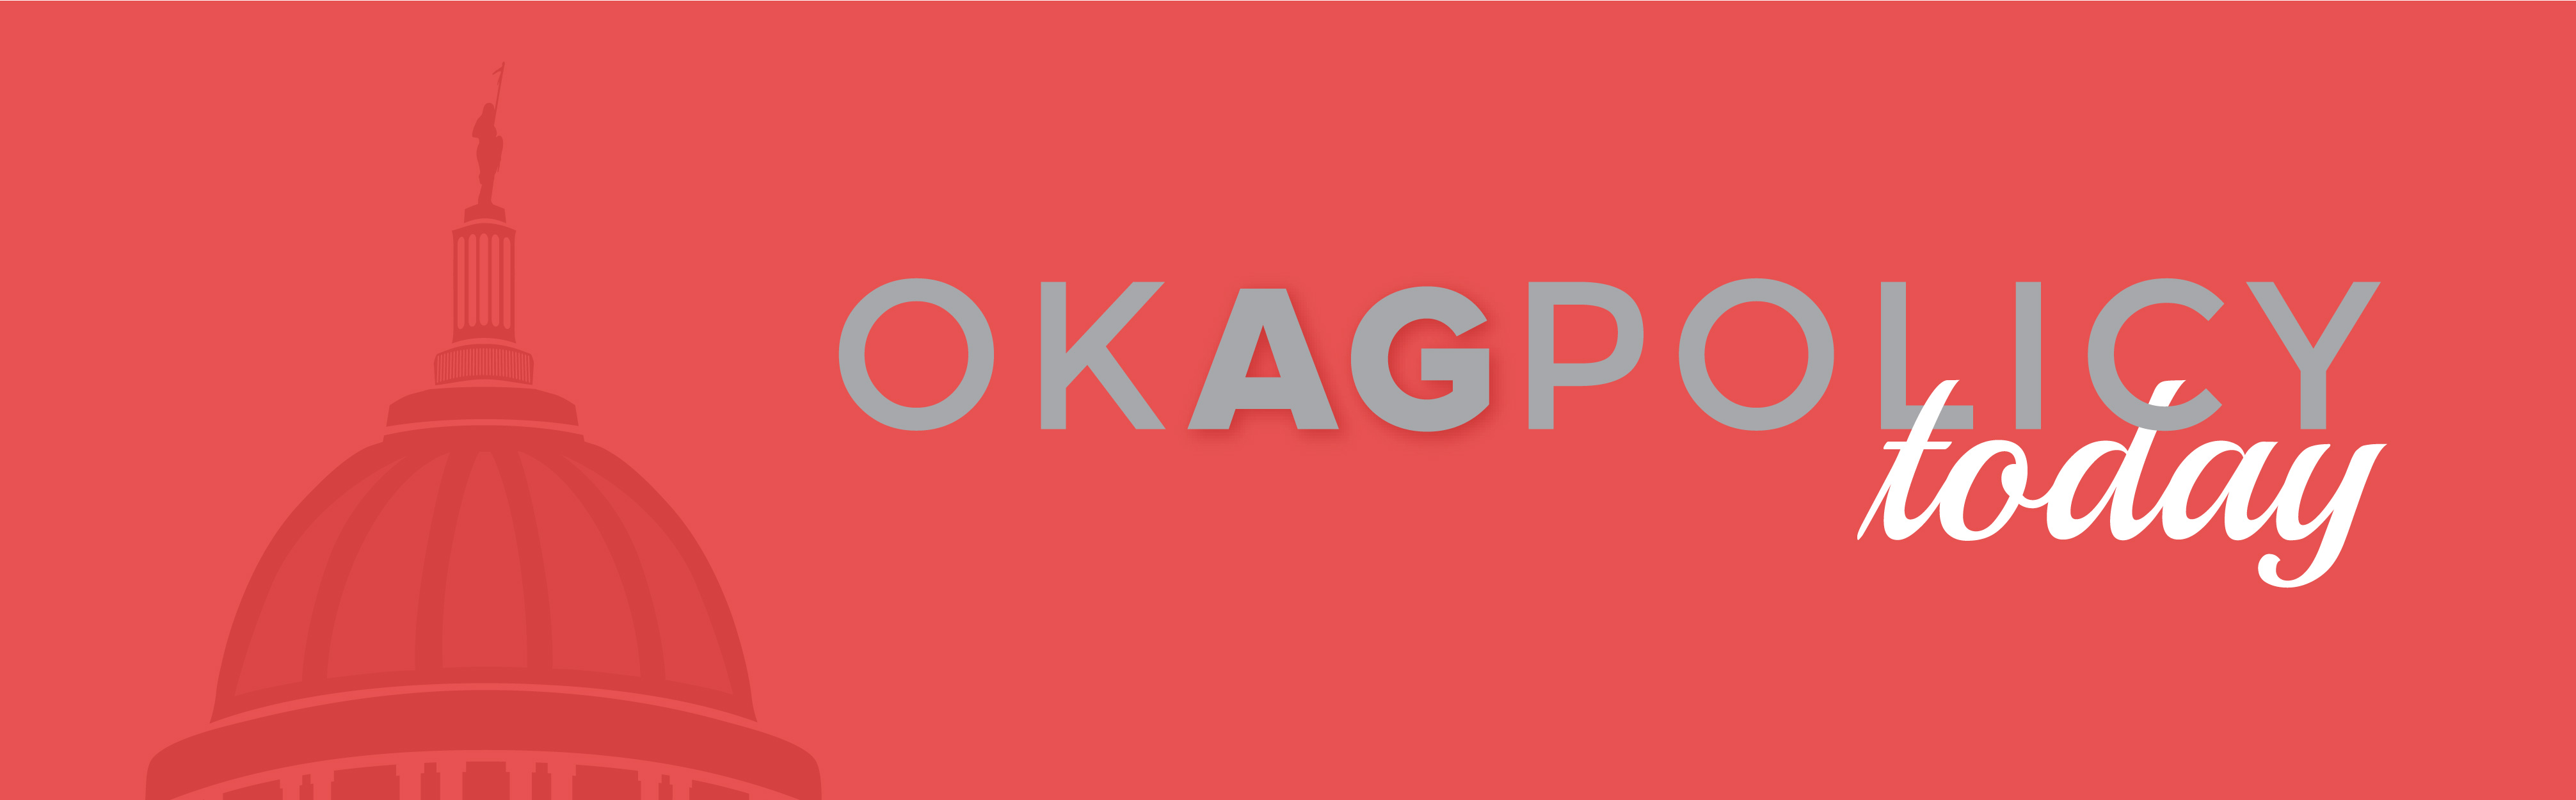 OKAgPolicyToday Announcement-01